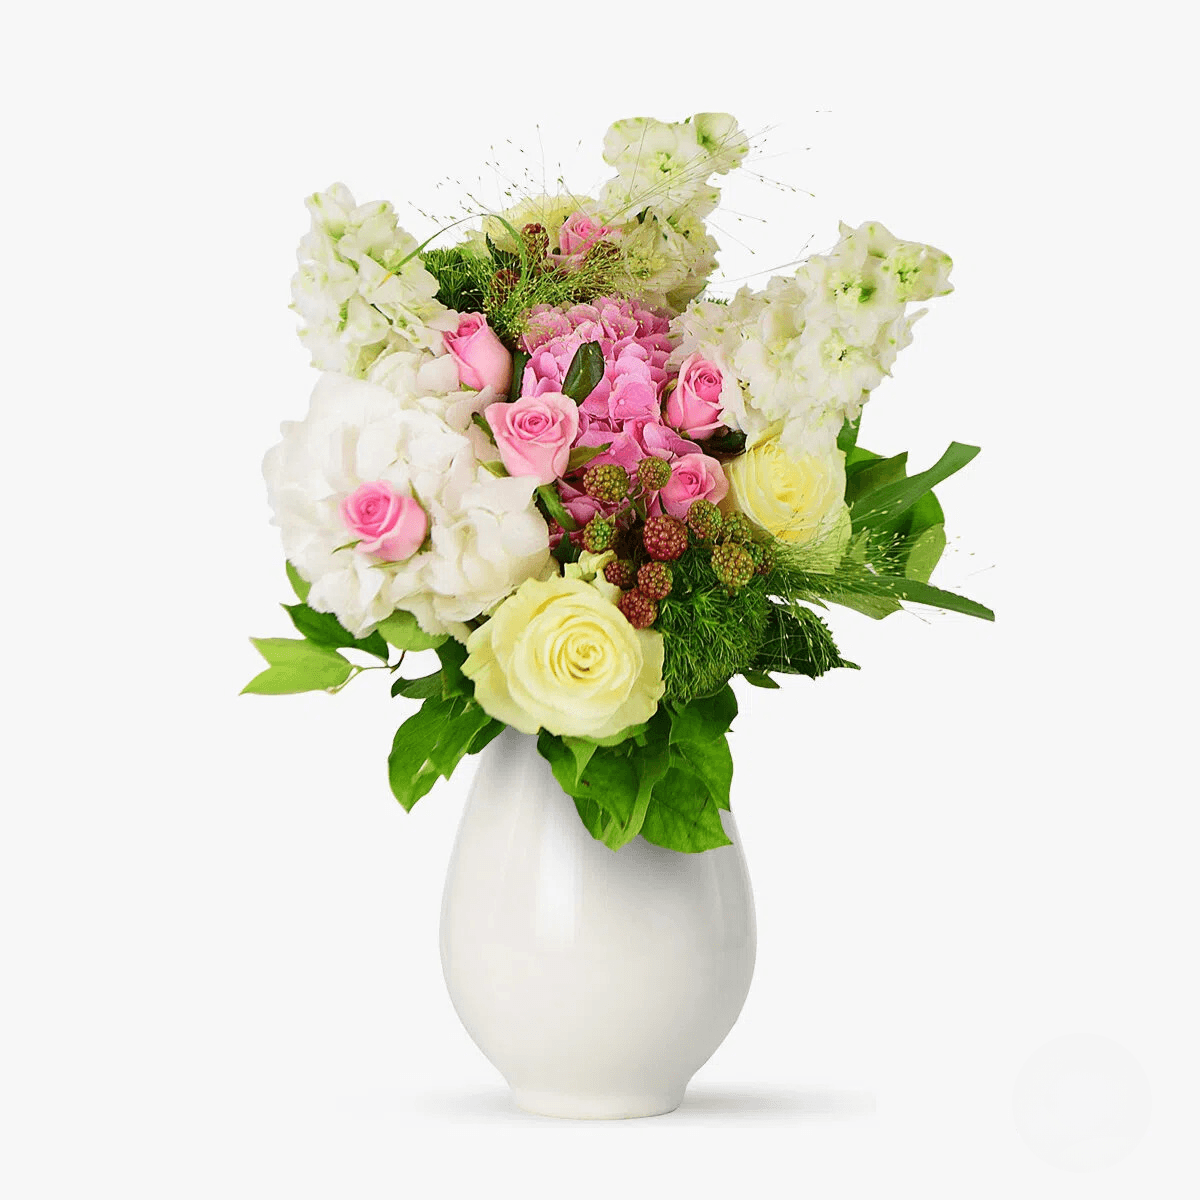 Buchet de flori cu hortensia, delphinium, trandafiri Pastel de flori